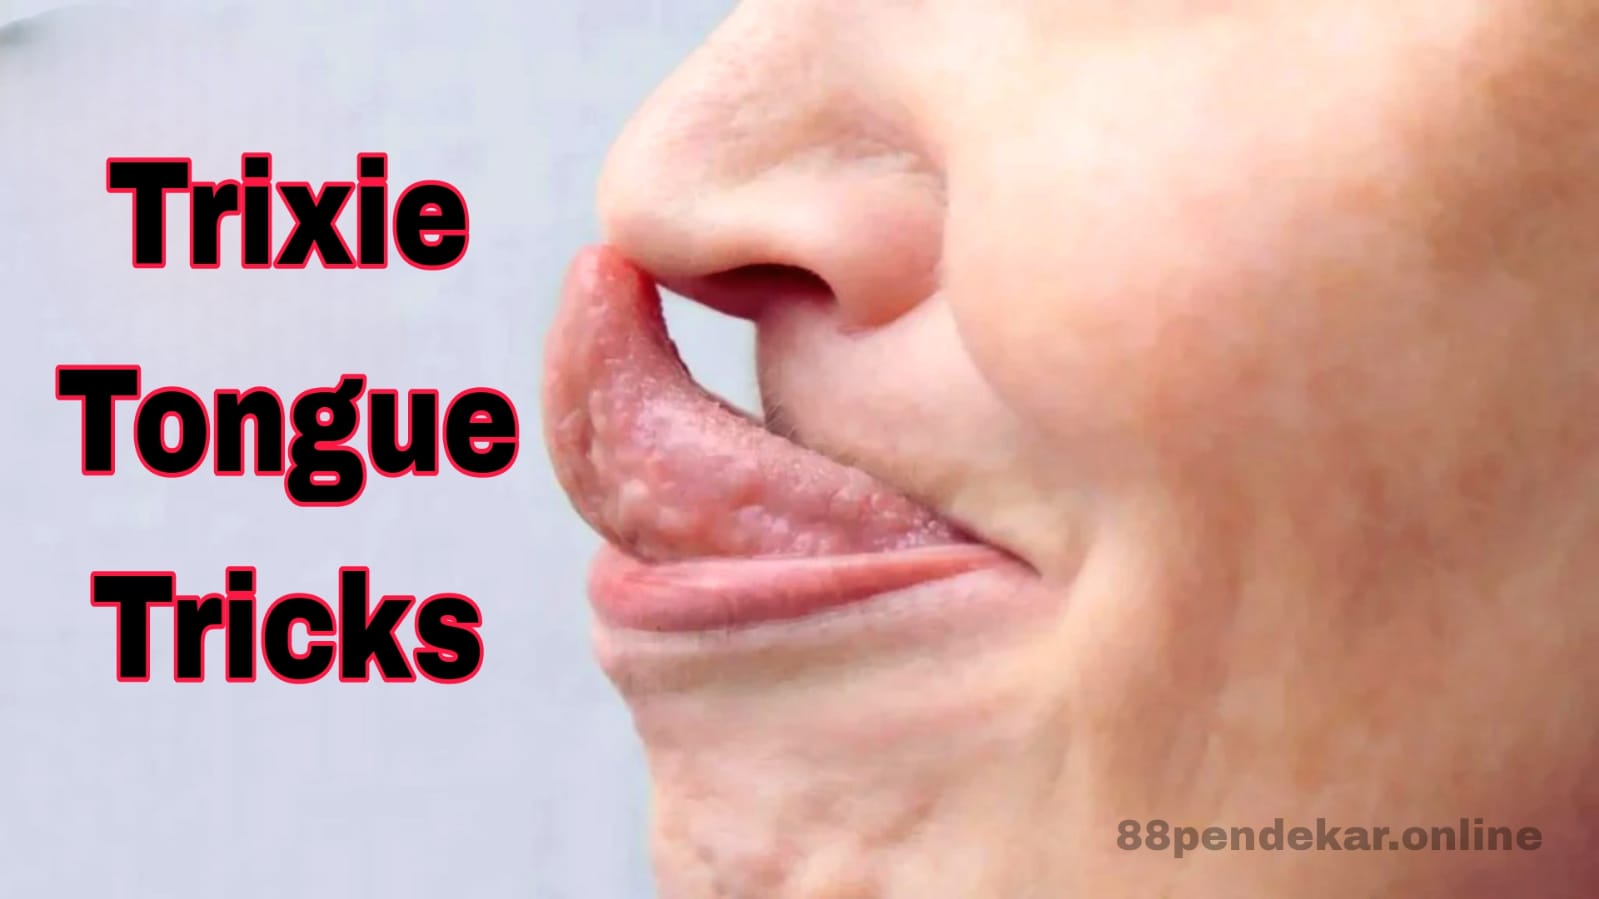 Trixie Tongue Tricks: A Playful Guide